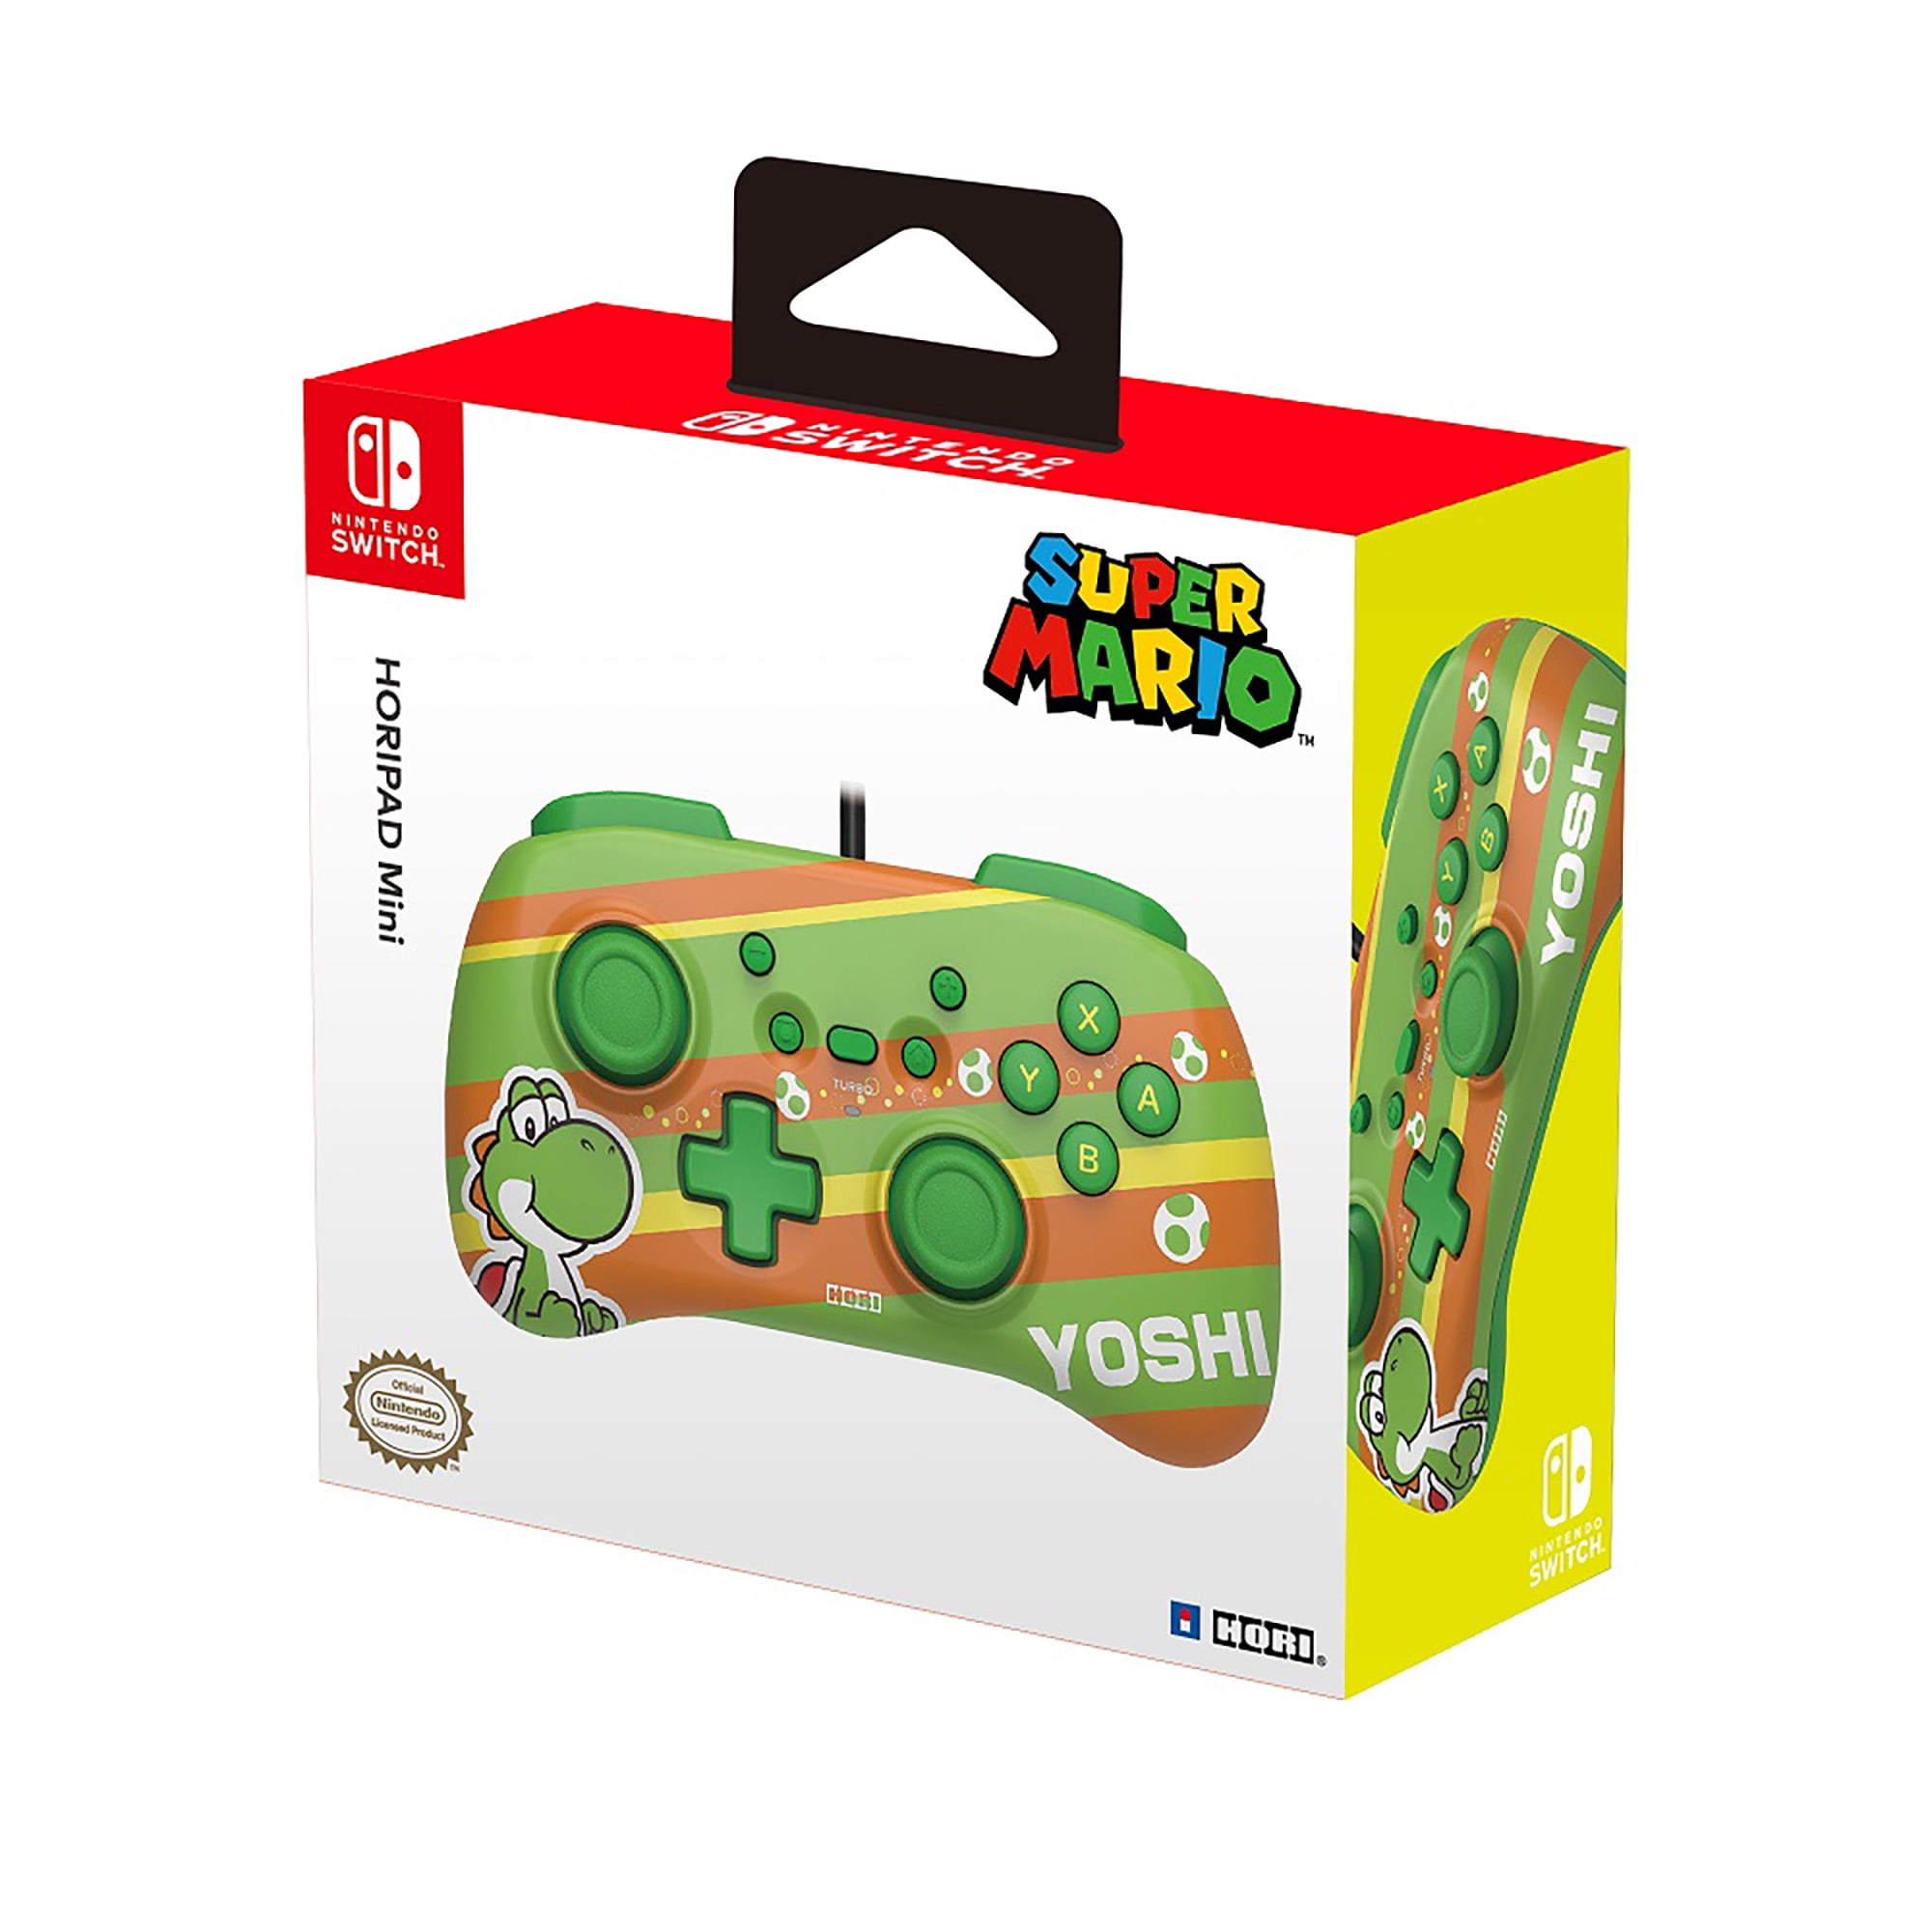 HORIPAD Mini for Nintendo Switch (Super Mario Series - Peach) Nintendo  Distributor SA